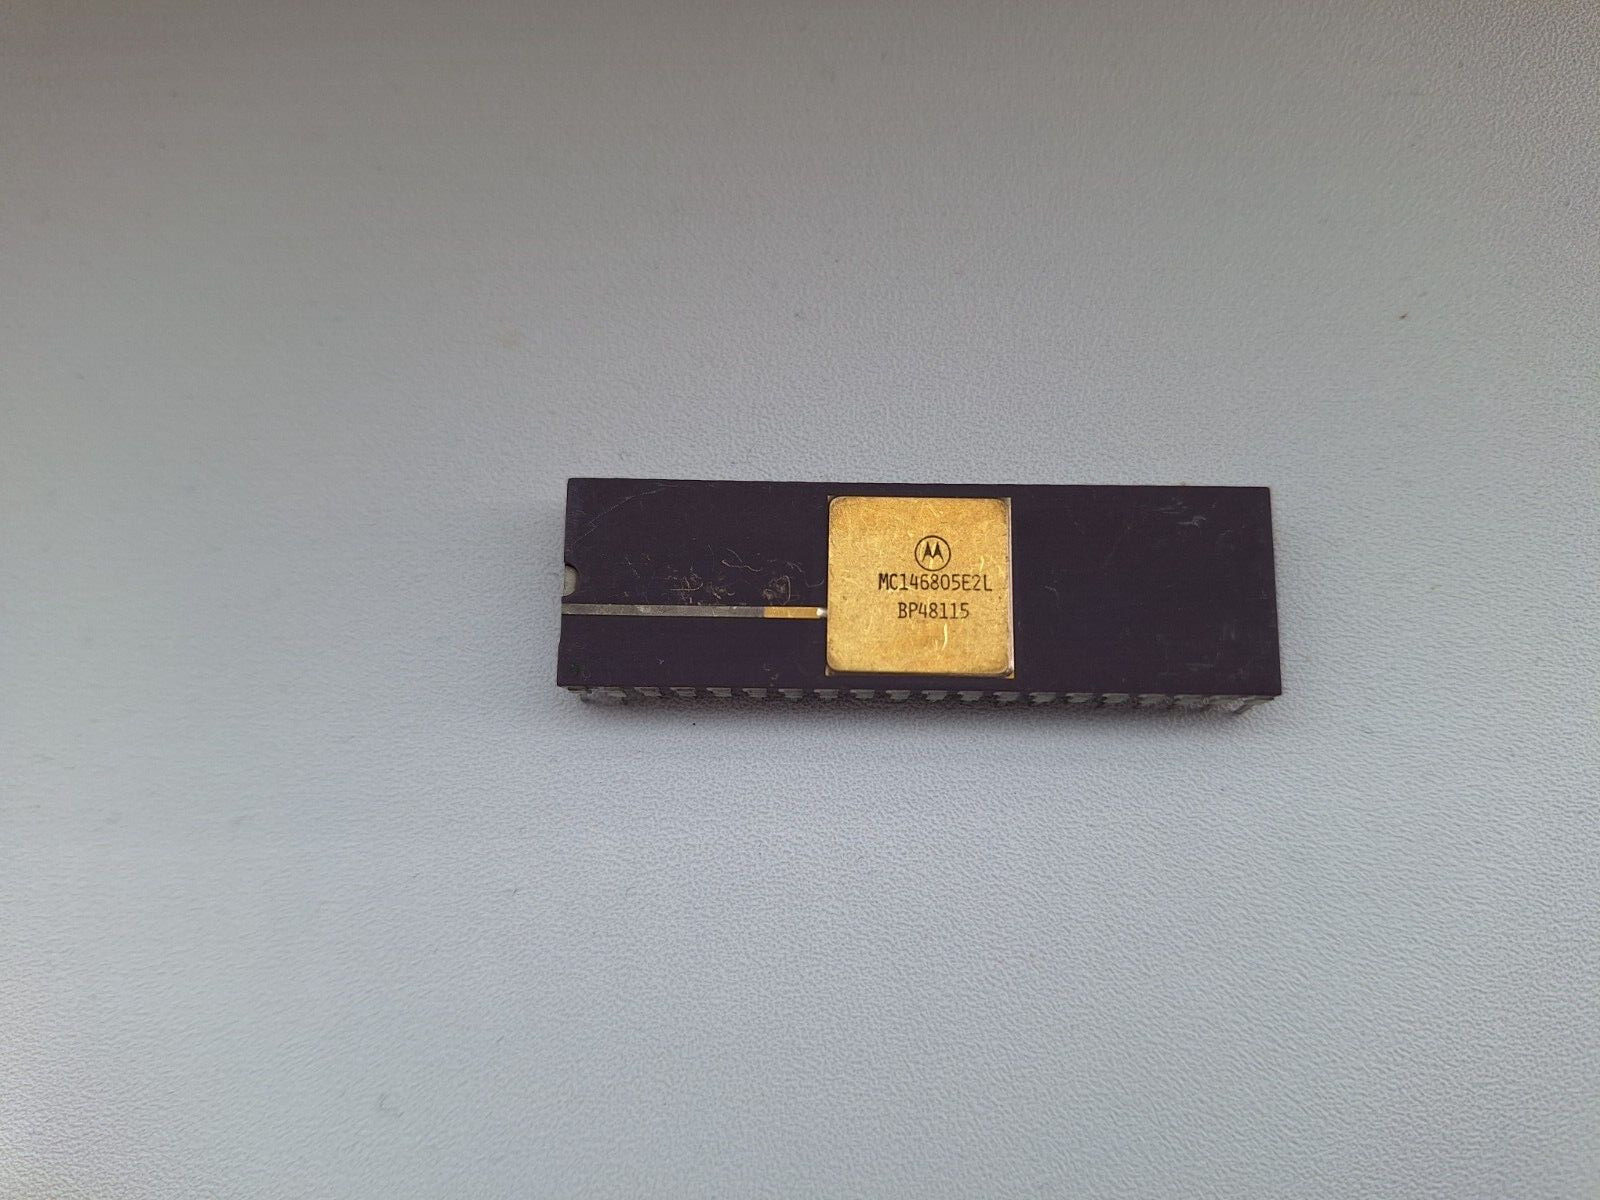 Motorola MC146805E2 uncommon 6805 8bit 5MHz vintage CPU GOLD